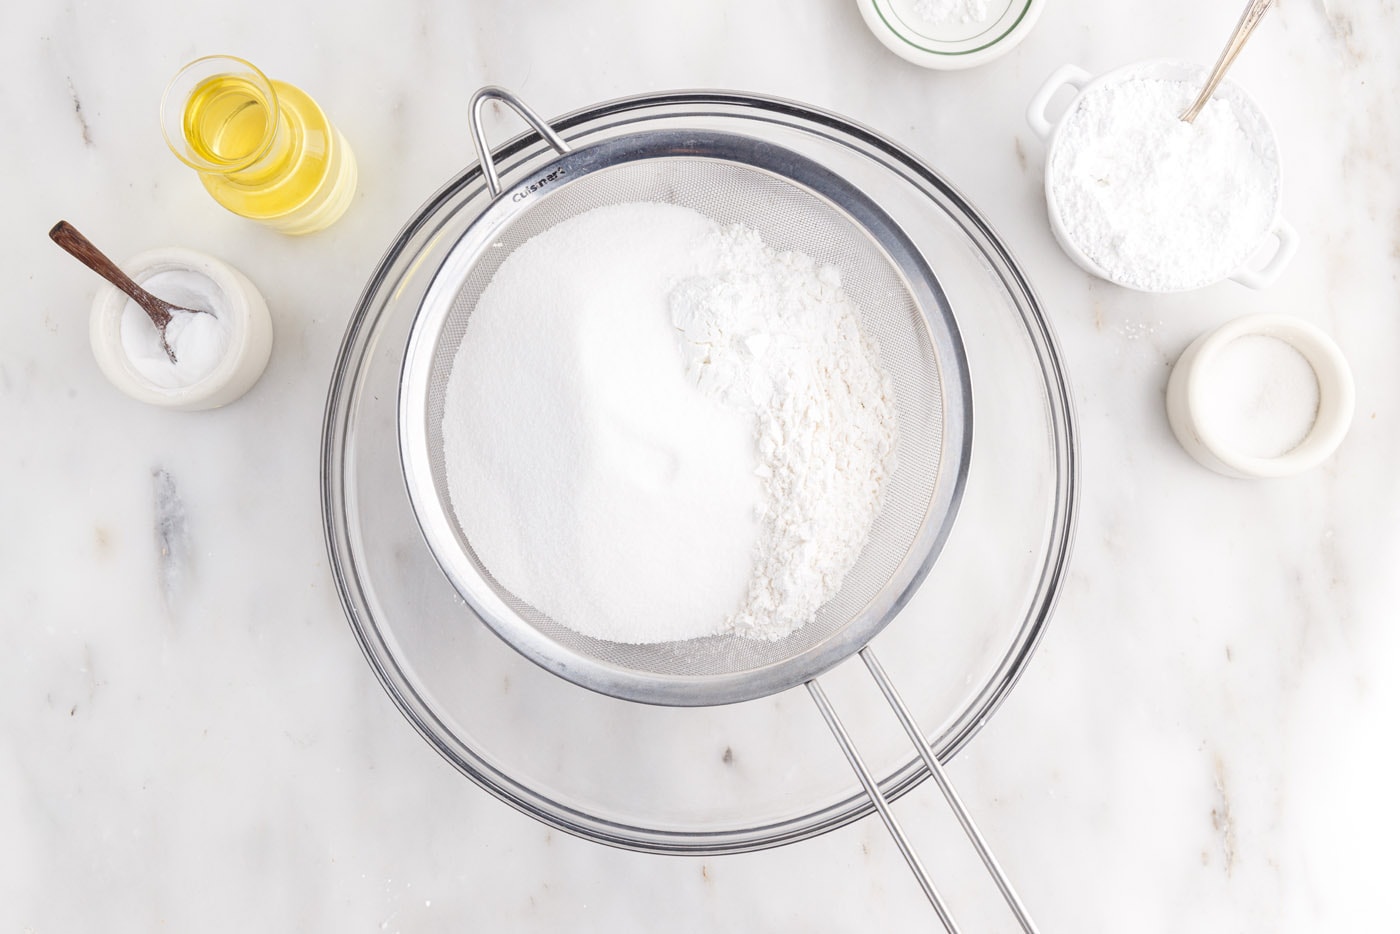 sifting cake flour, sugar, baking powder, and salt in a bowl